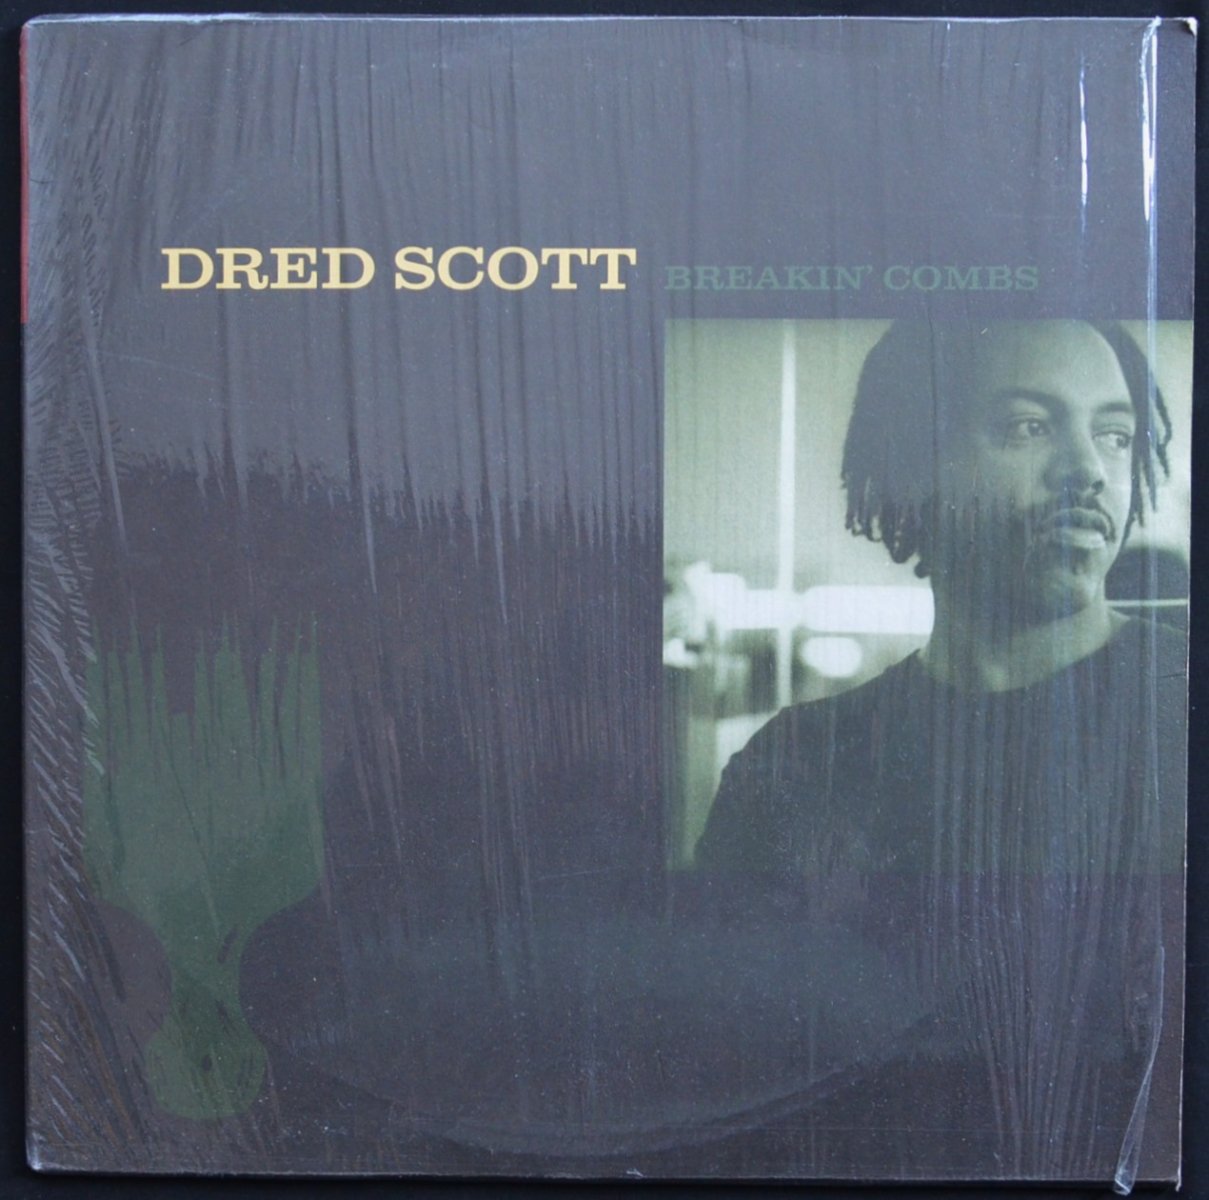 DRED SCOTT / BREAKIN' COMBS (2LP) - HIP TANK RECORDS